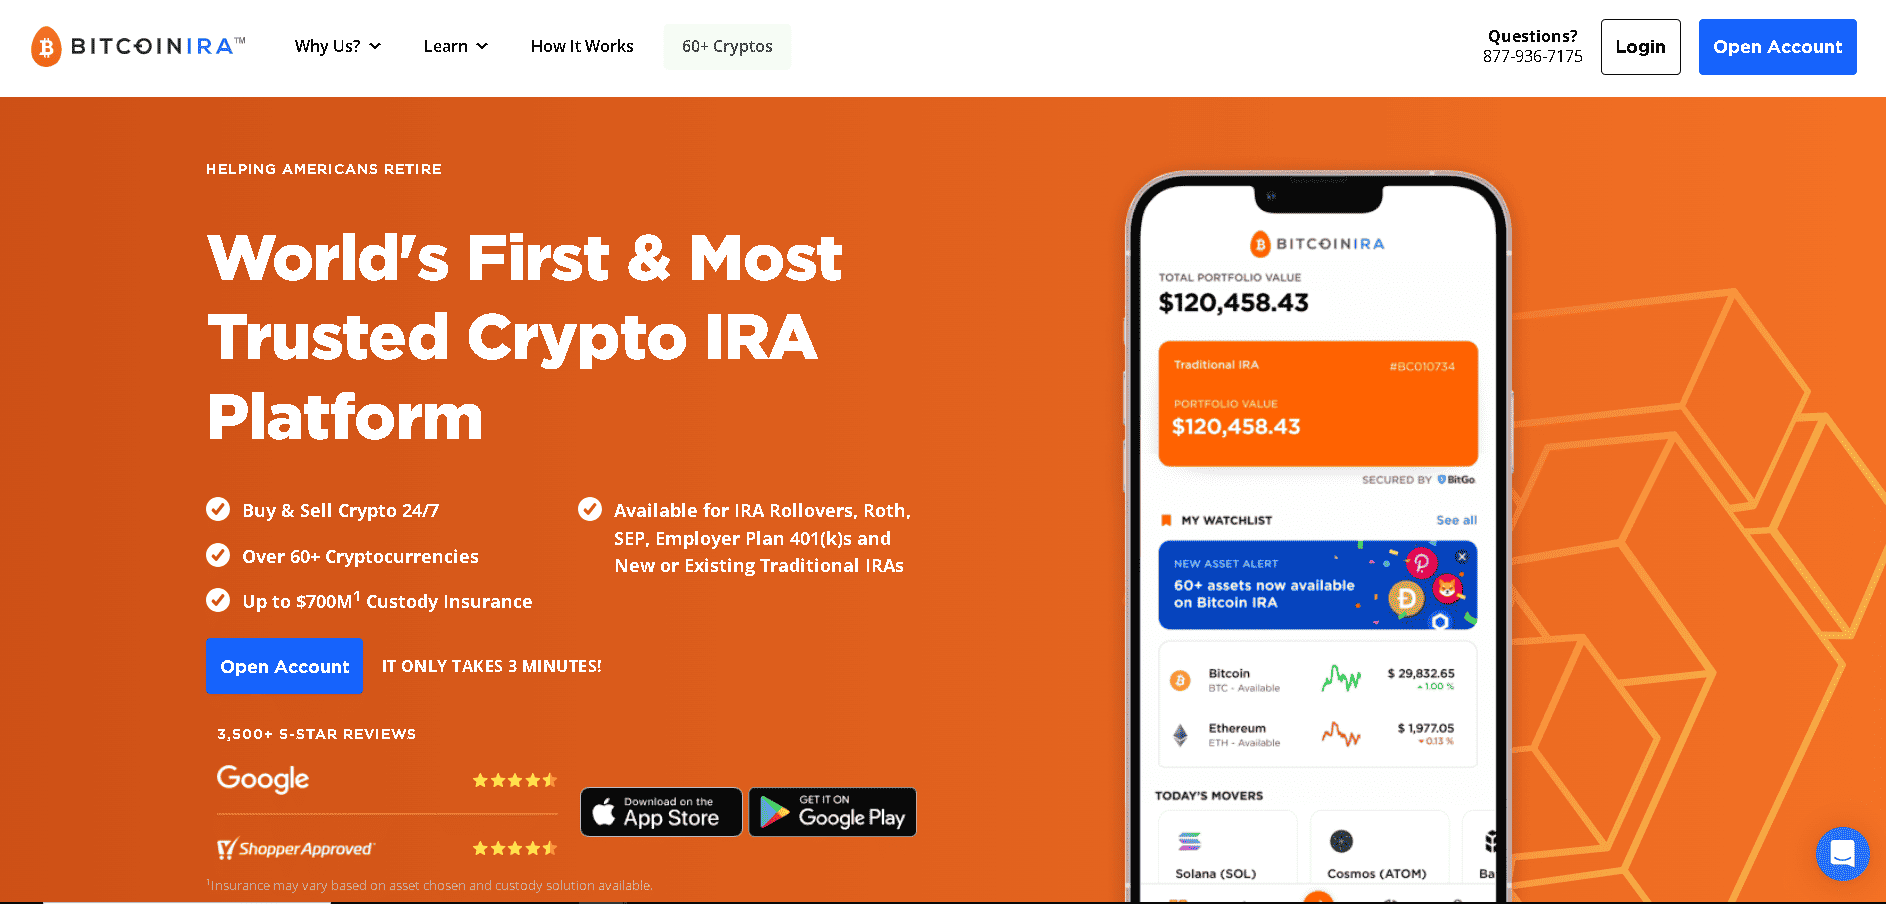 Bitcoin IRA is a legit and reputable crypto IRA company